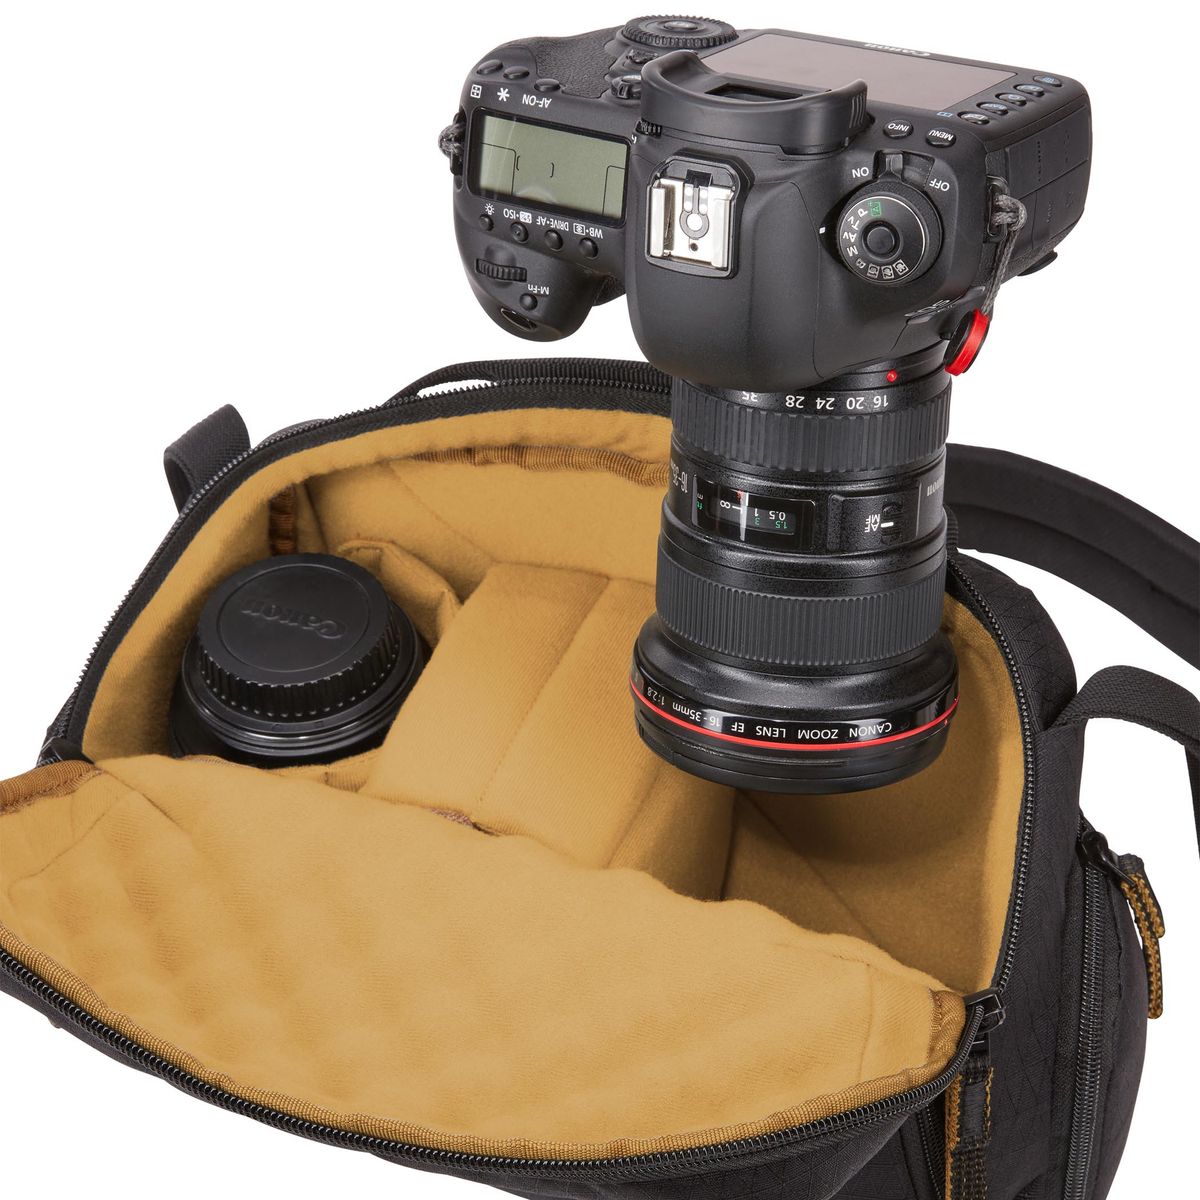 Case Logic Viso Medium Camera Bag